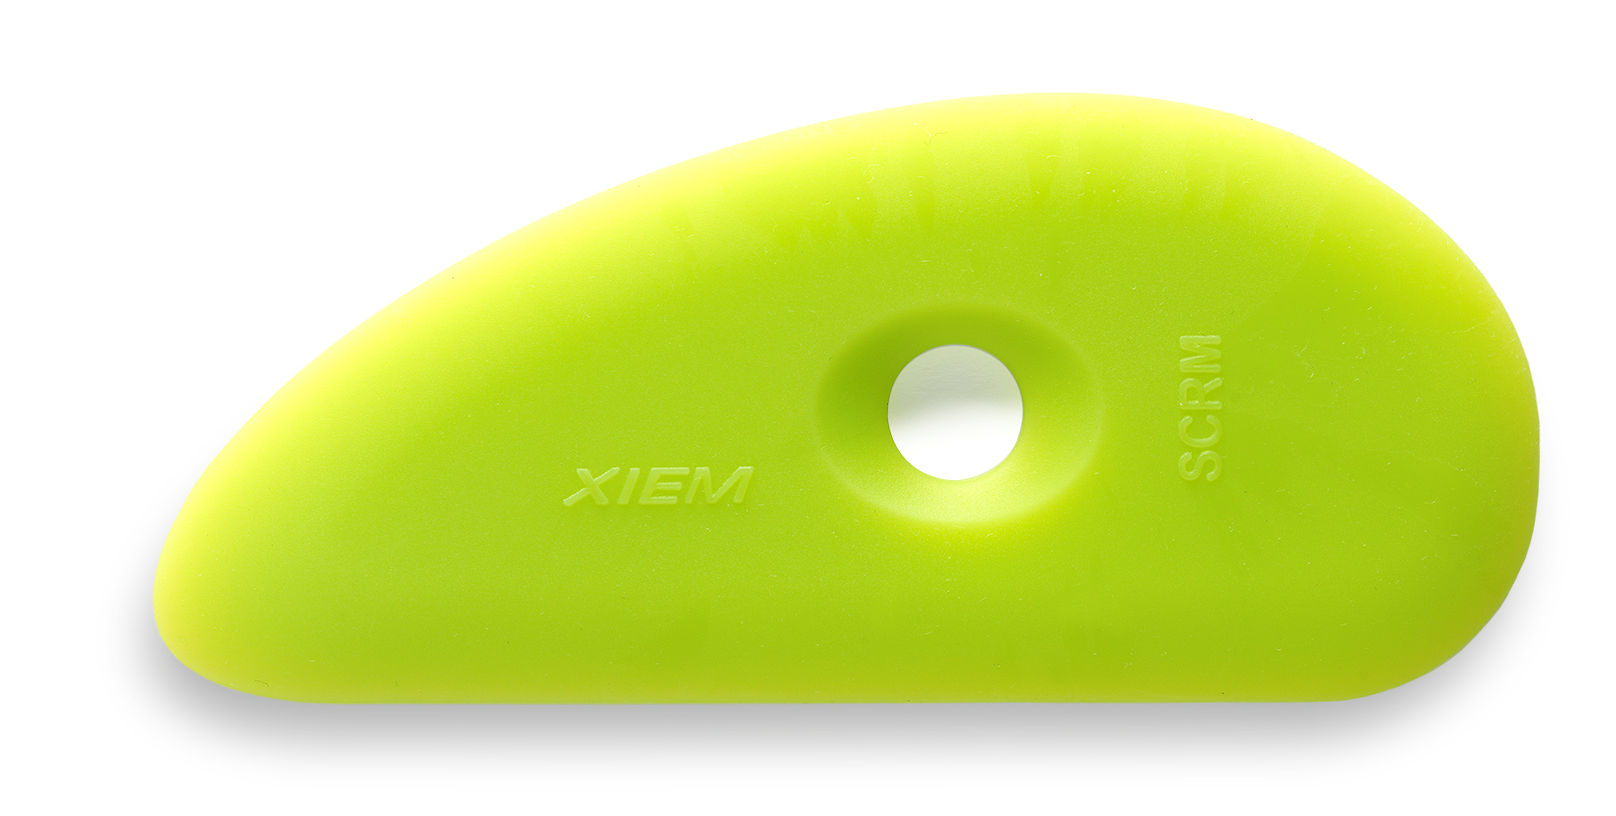 Xiem SCRM Ultra Soft Medium Chartreuse Silicone Potters' Rib